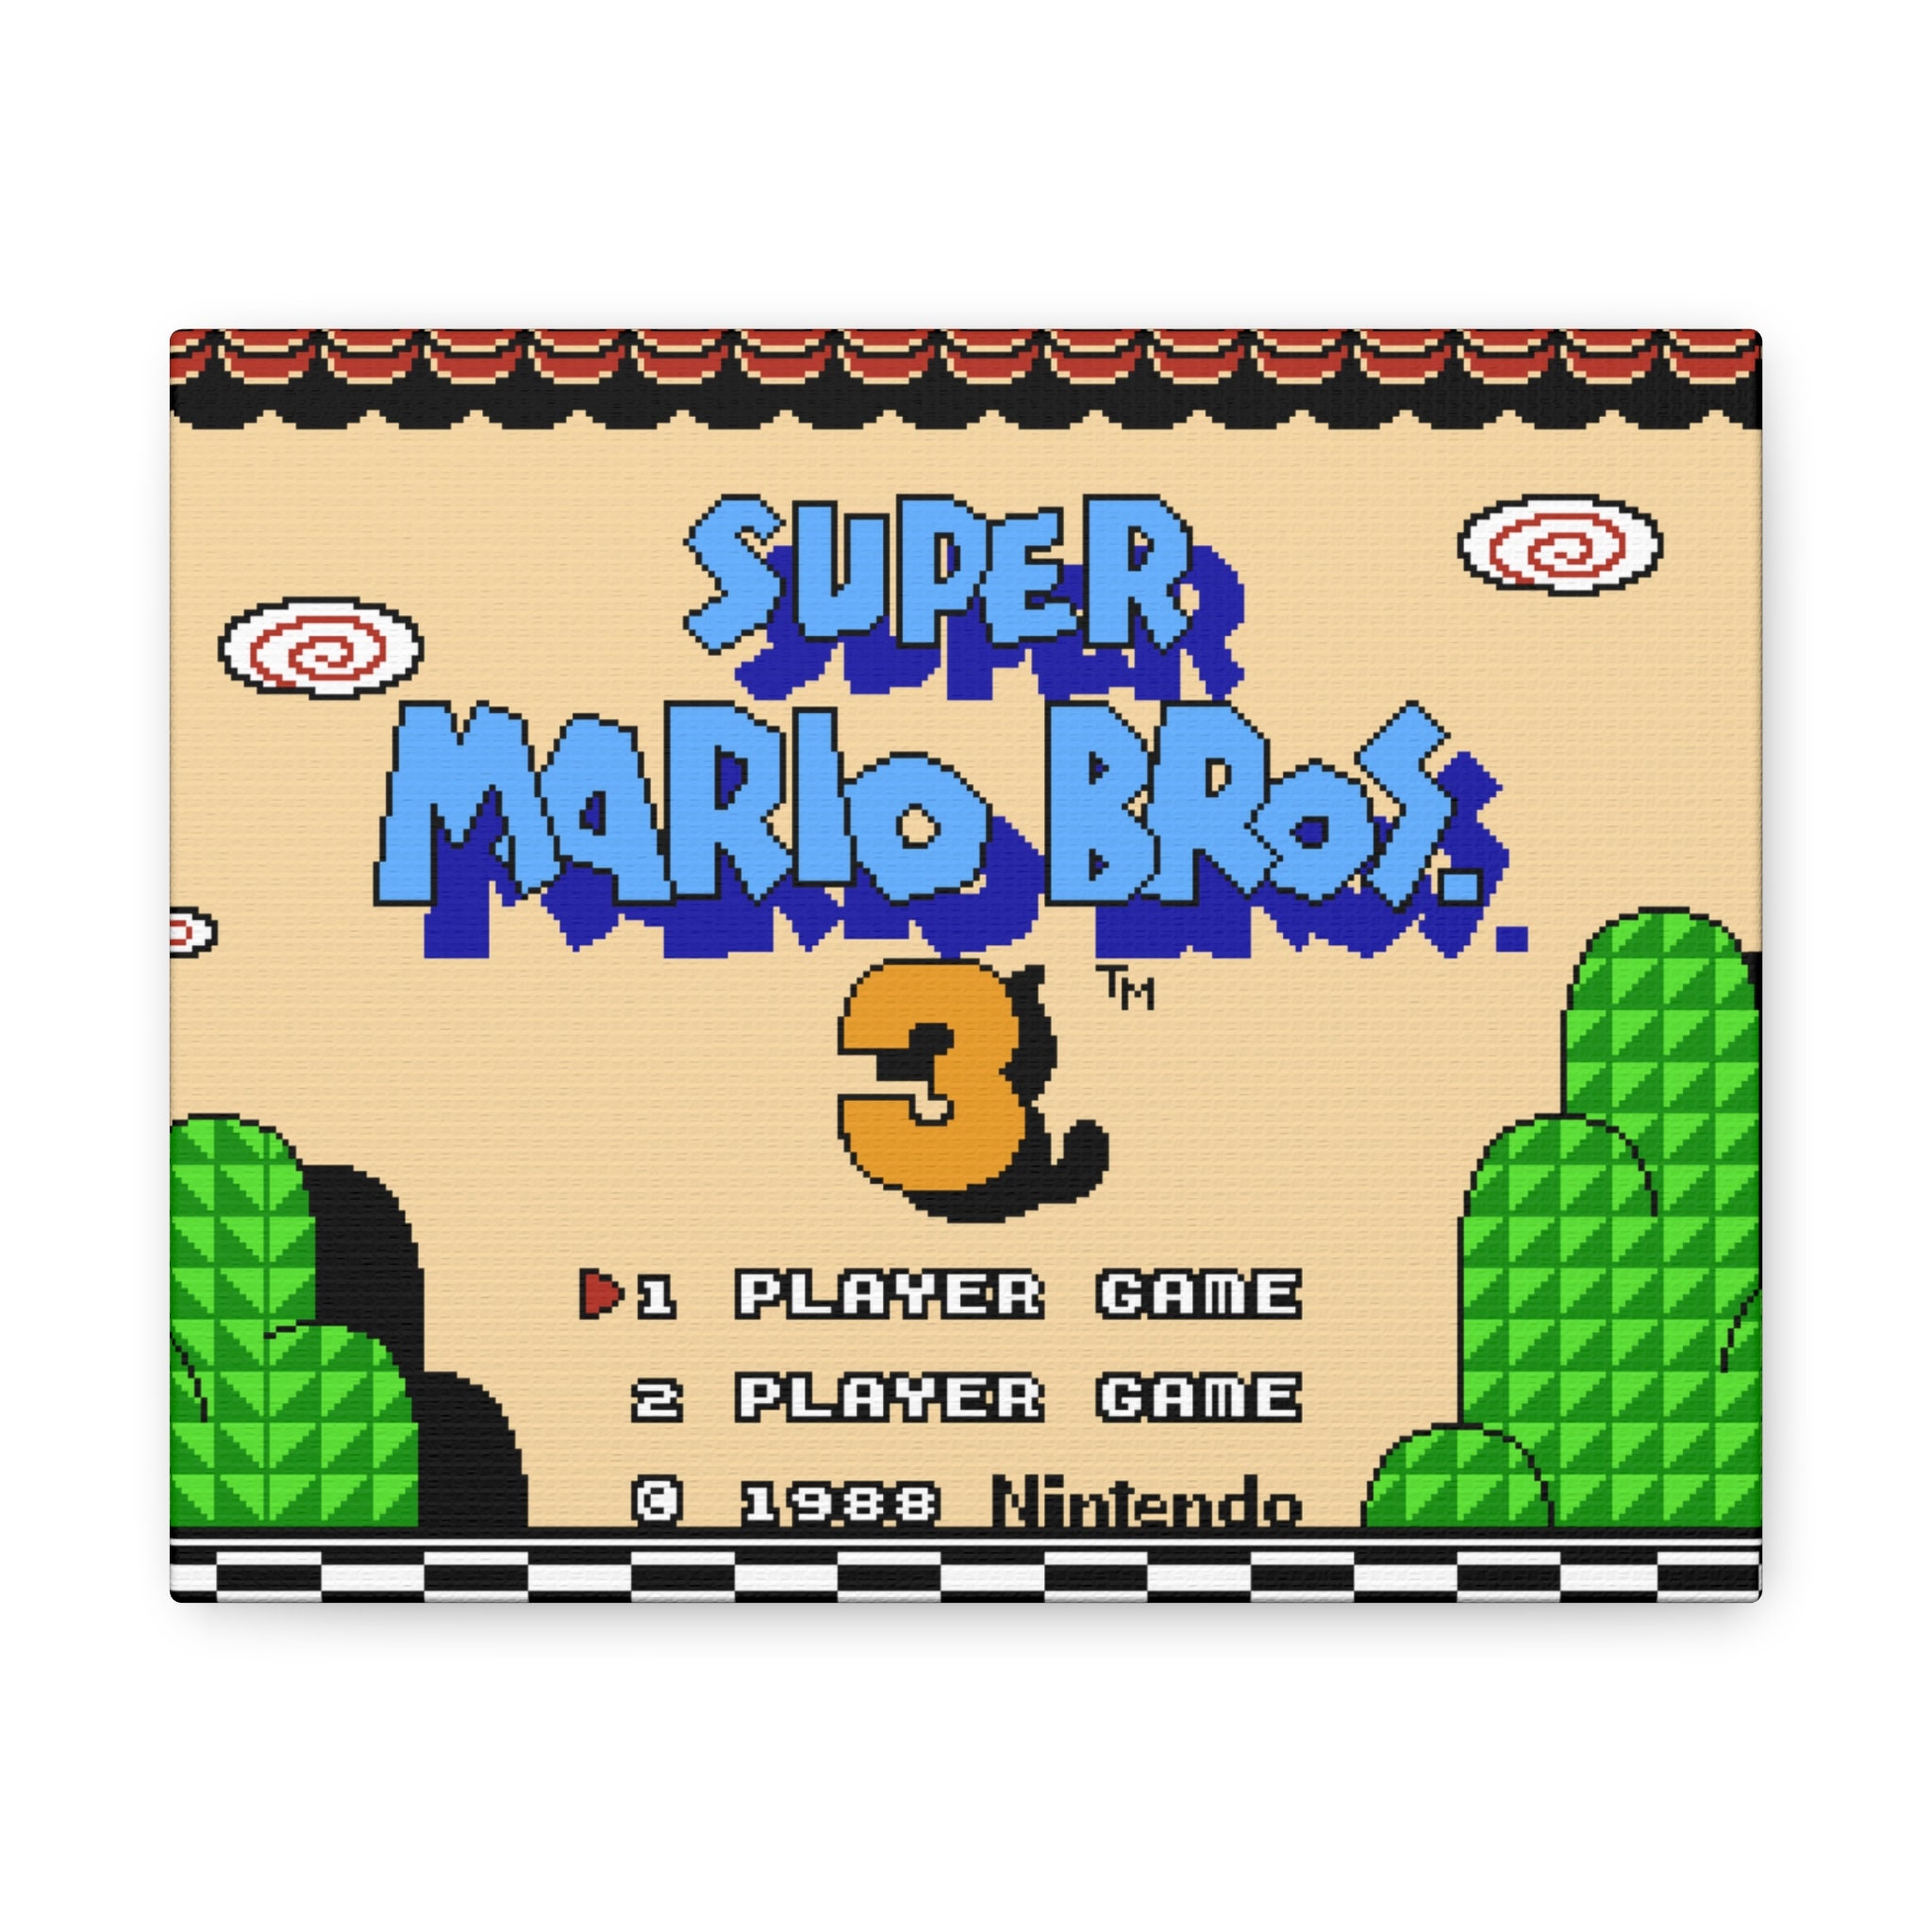 Retro Review: Super Mario World (1990) - Epilogue Gaming